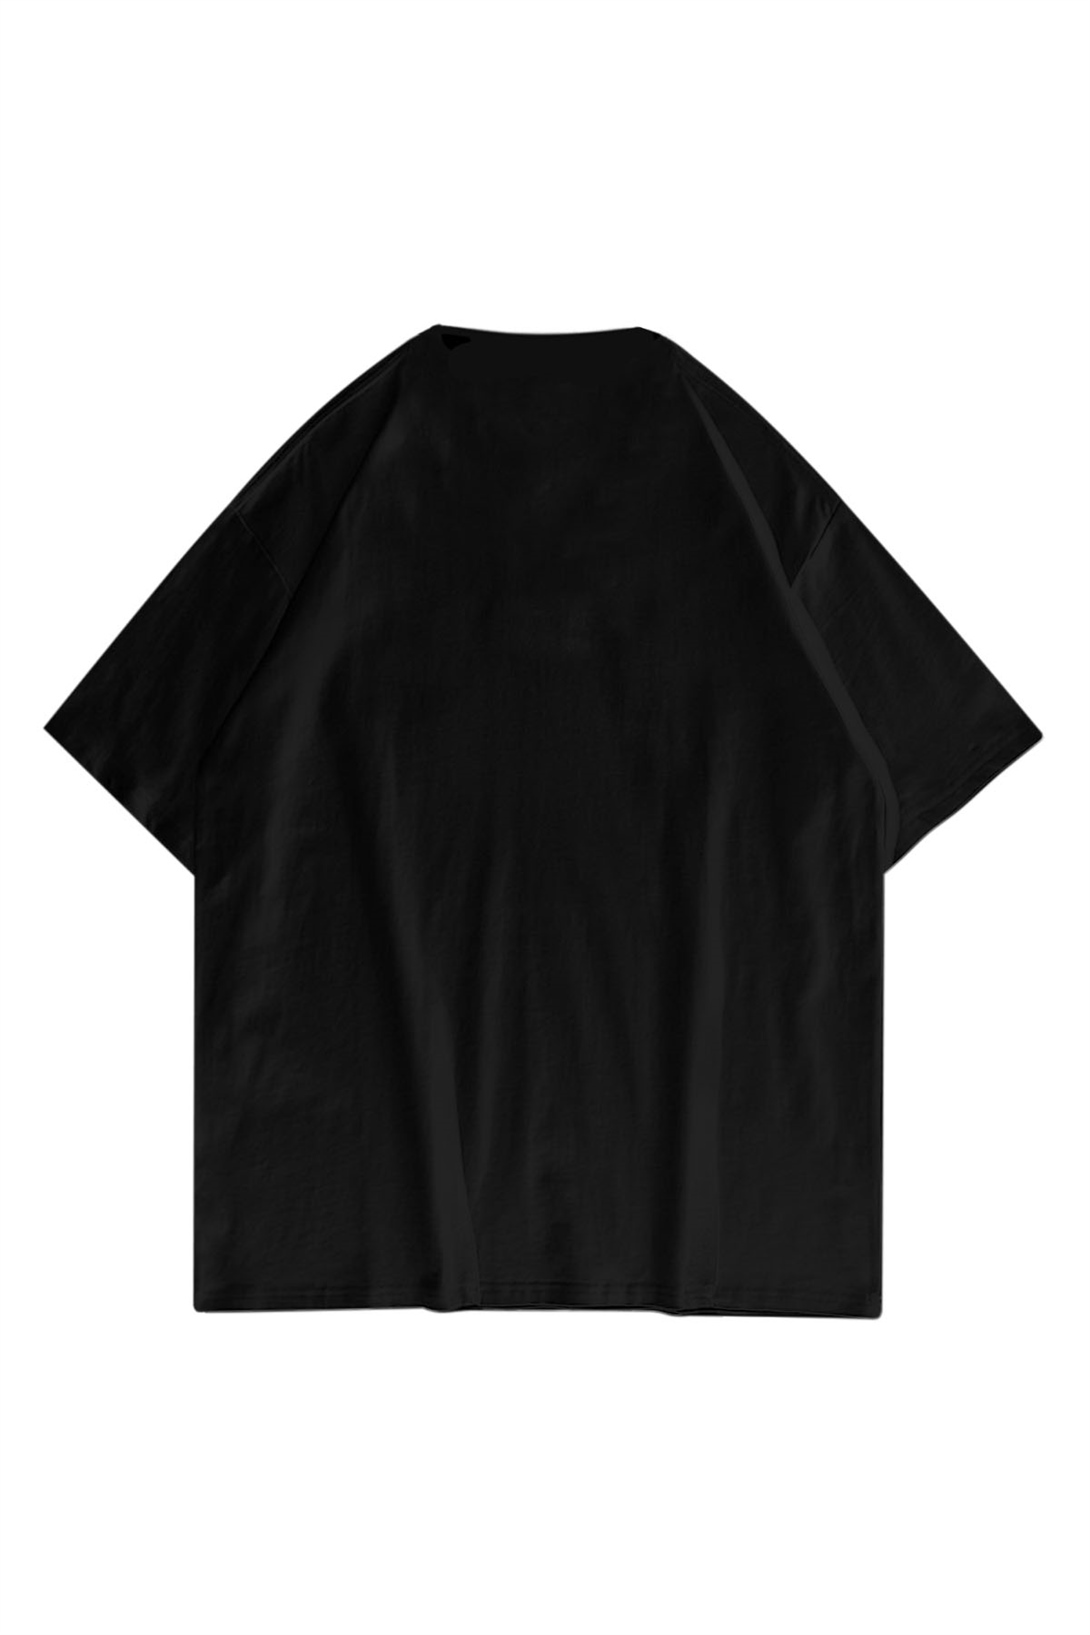 Trendiz Unisex Astronomical 2020 Siyah Tshirt